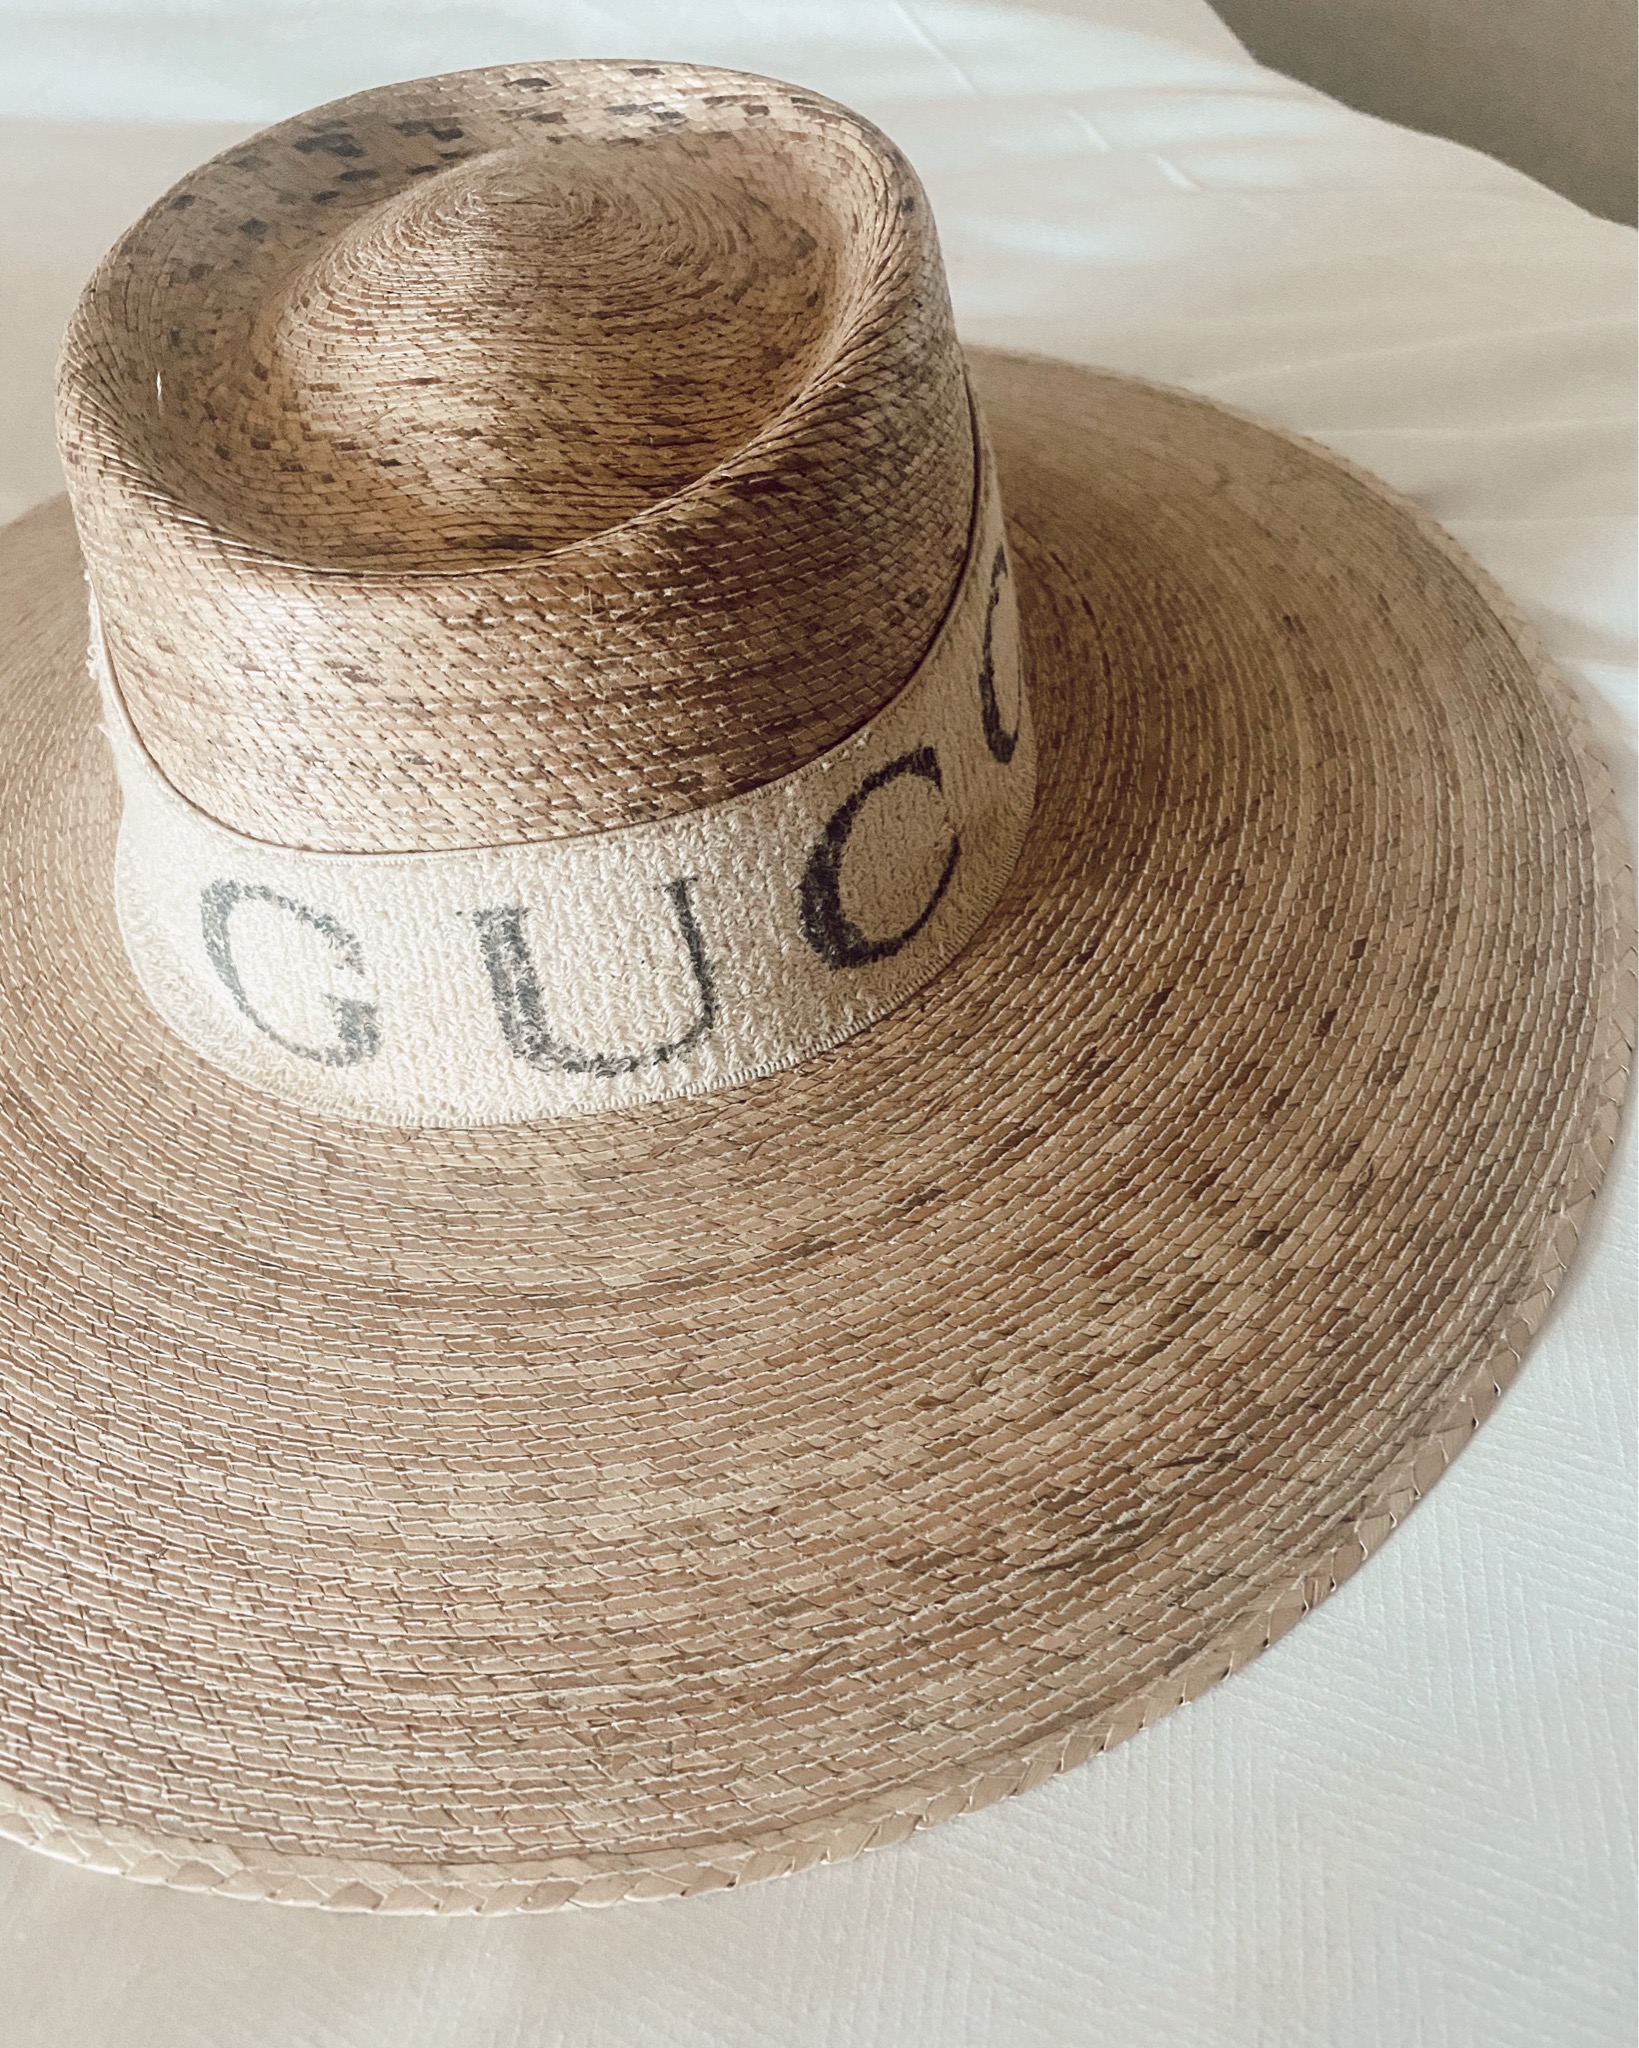 Lack of Color Palma Wide Boater Hat, Gucci Headband